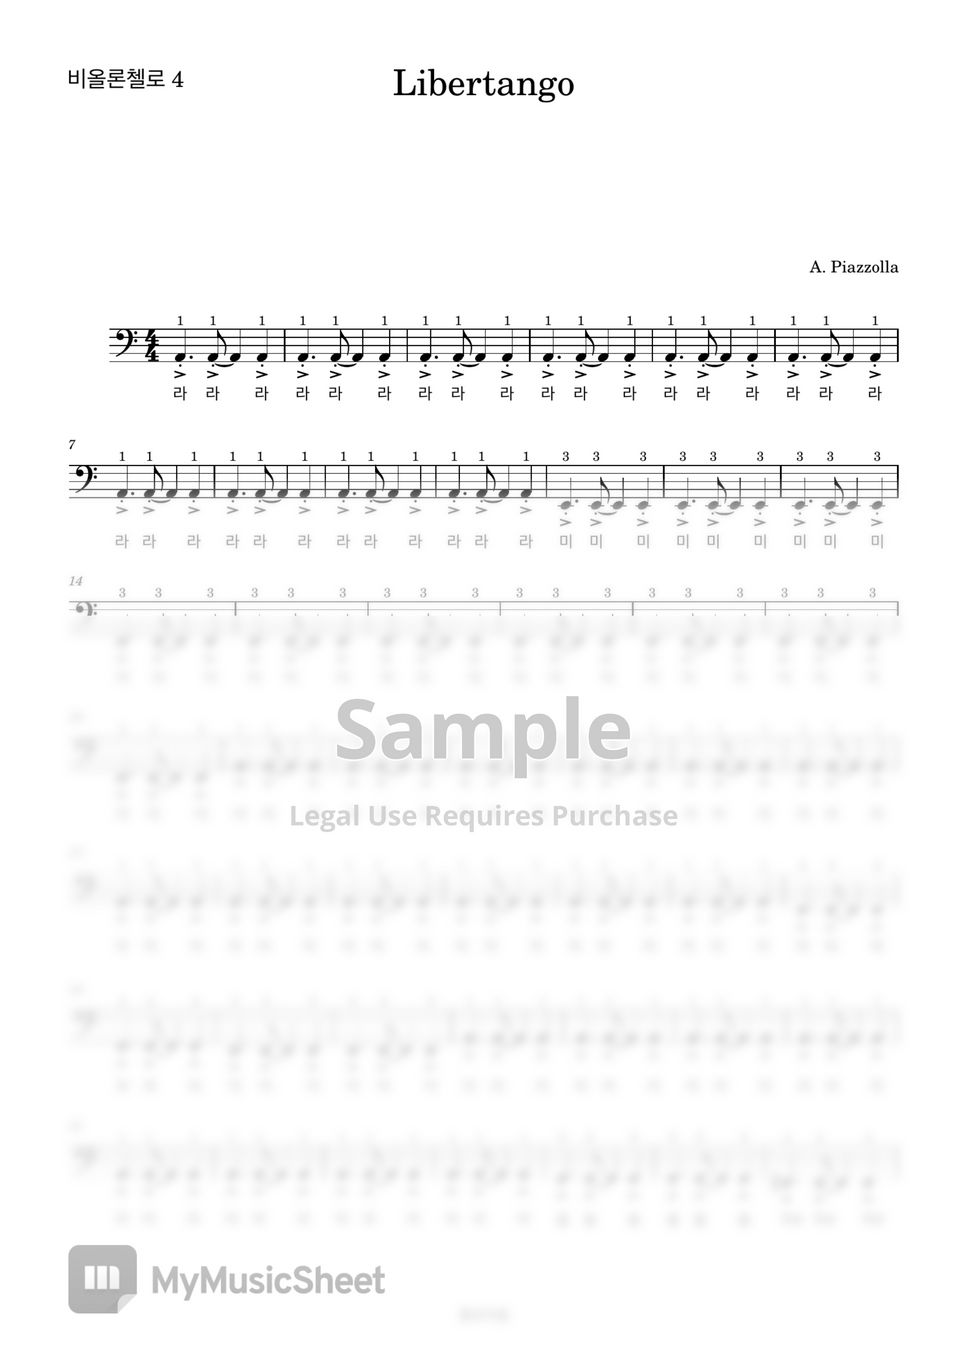 A. Piazzolla - Libertango (첼로4중주, 계이름&손가락 번호 포함) by 첼로마을